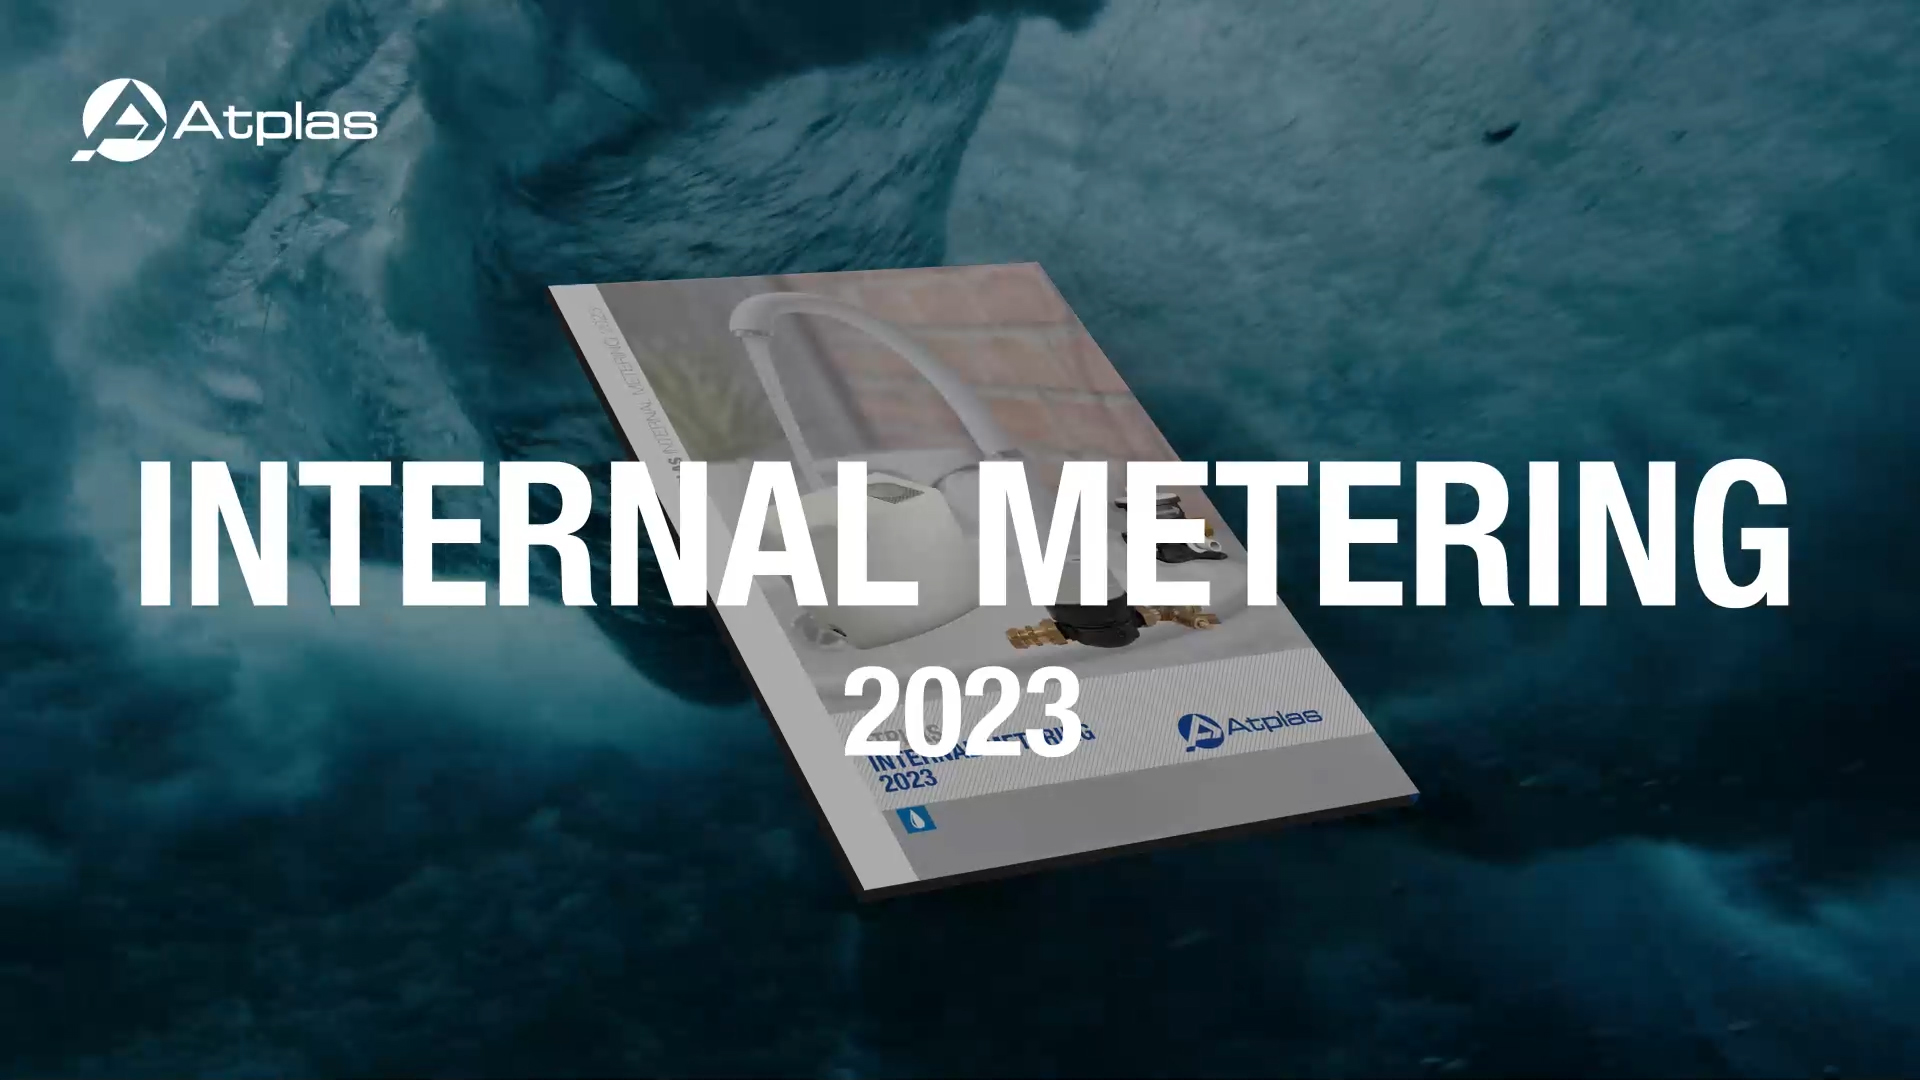 Atplas Internal Metering Catalogue 2023 Teaser image